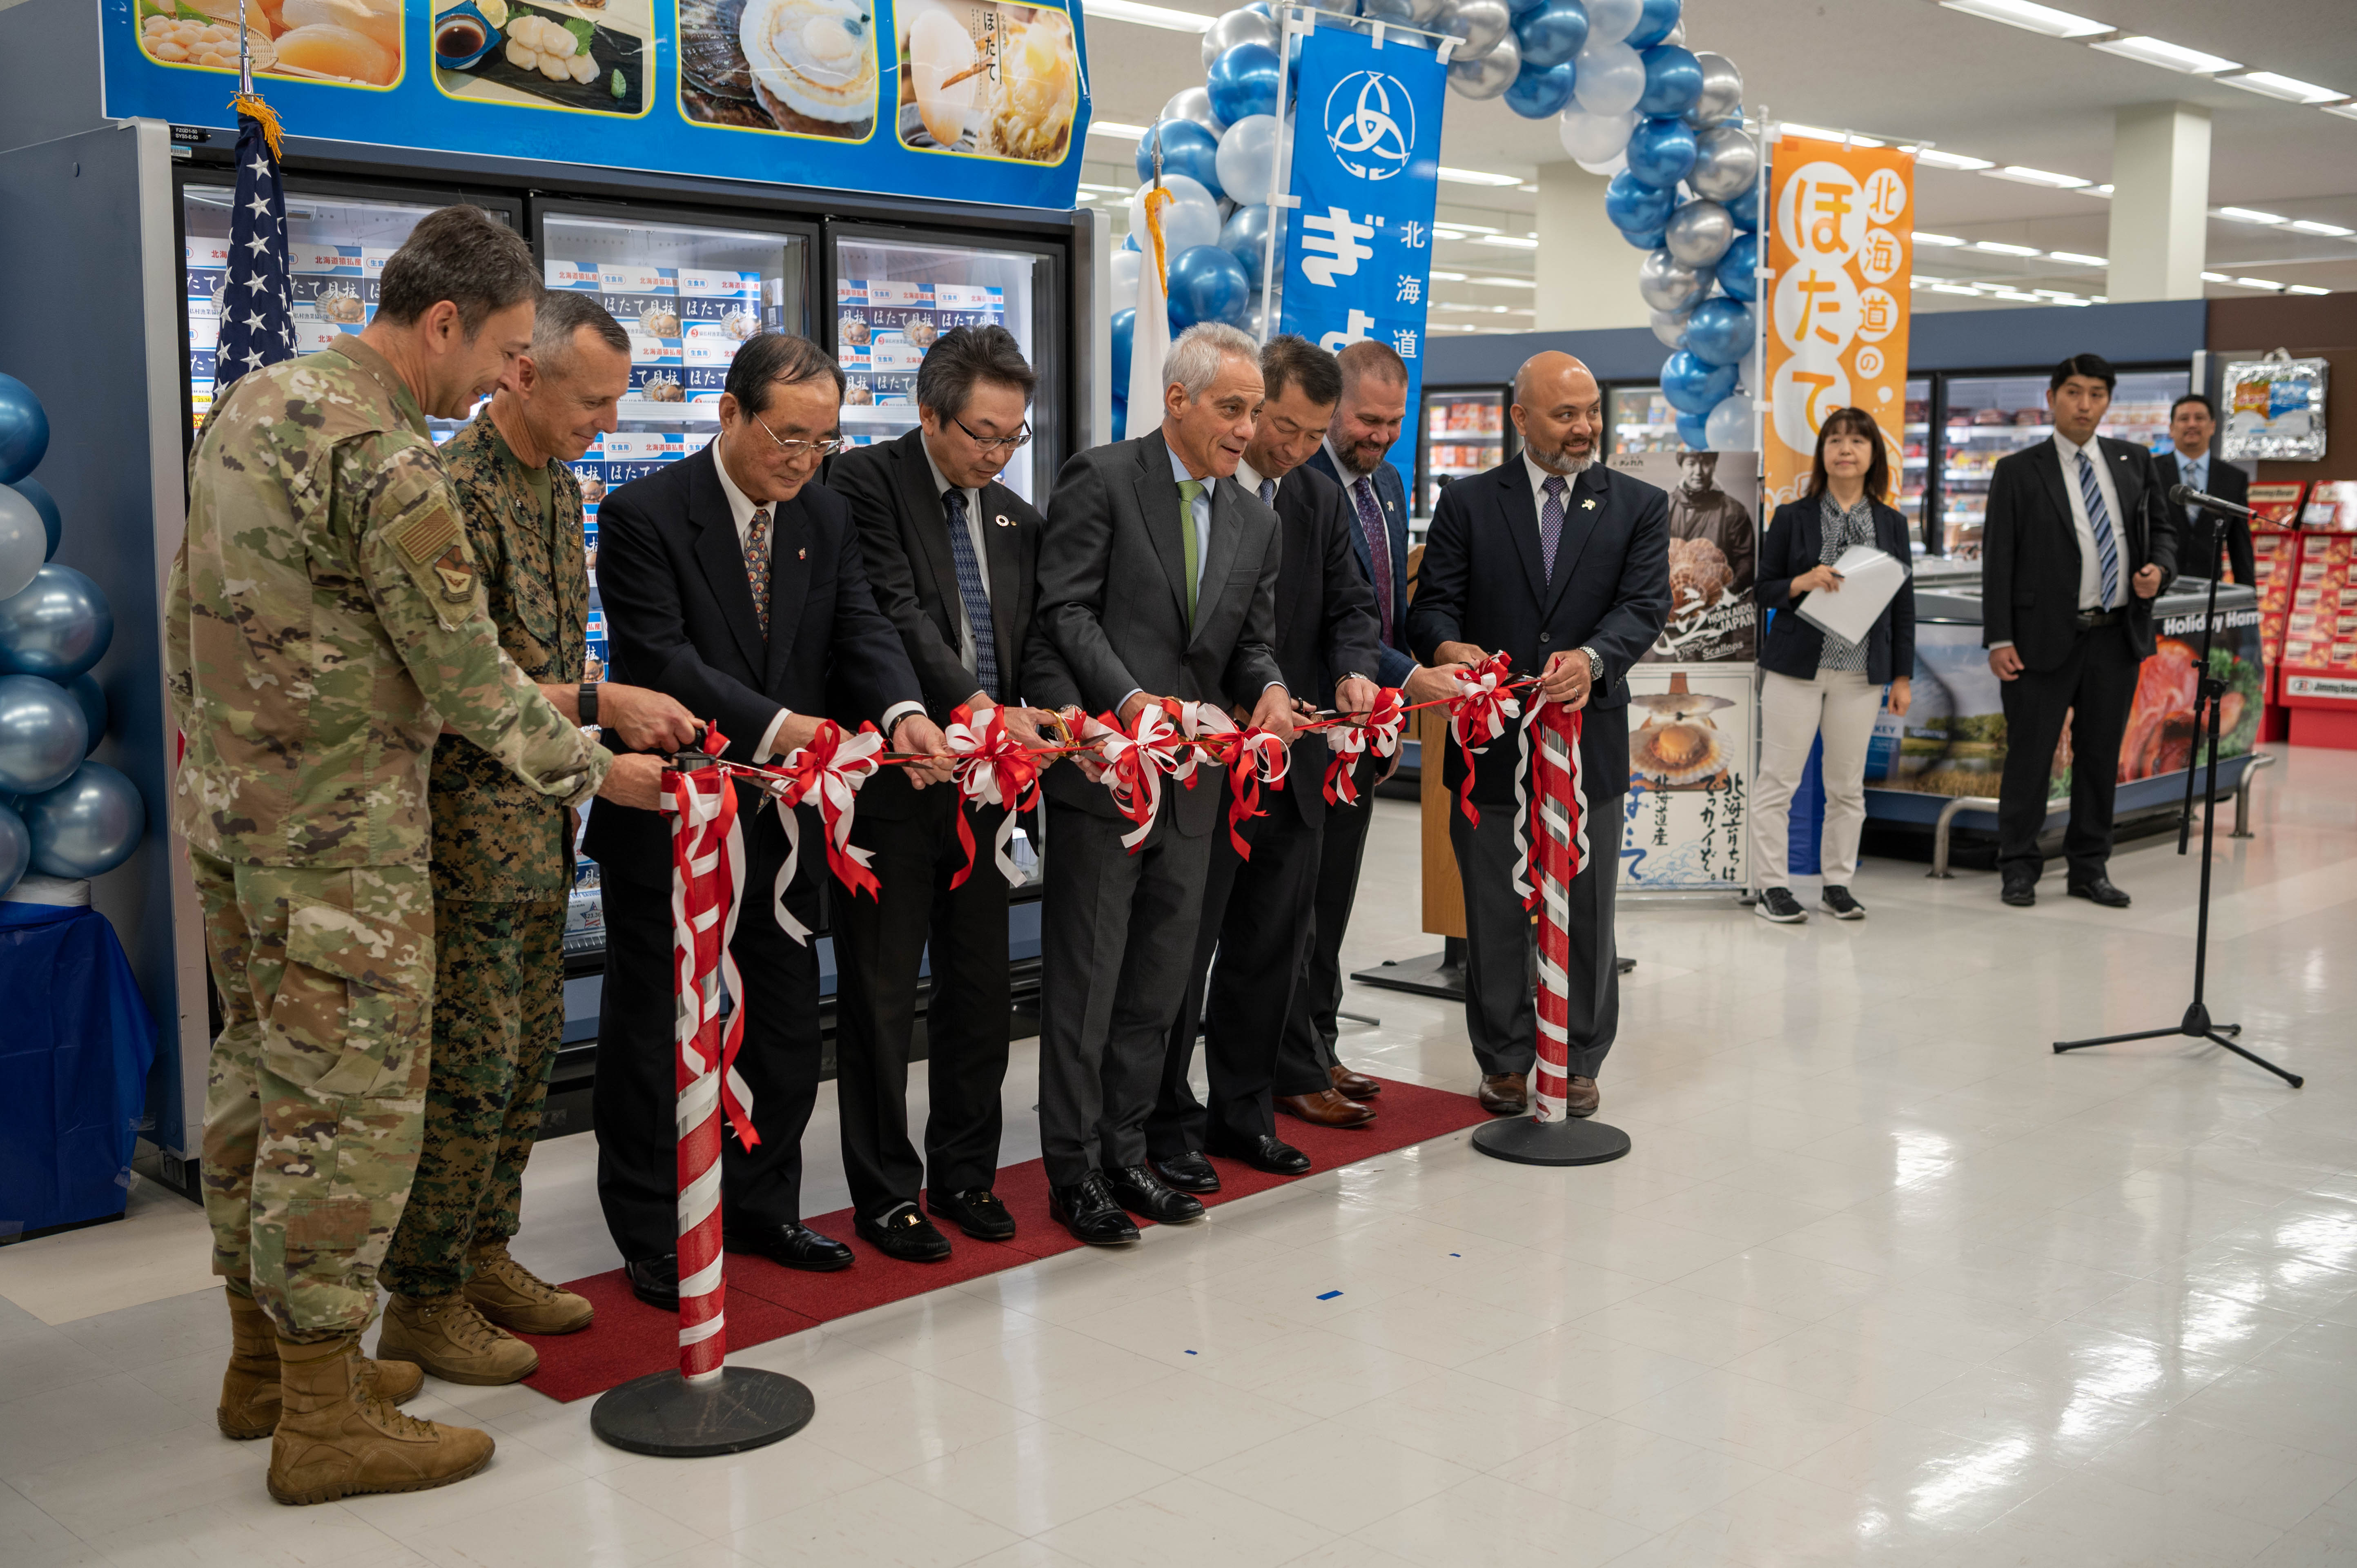 US Ambassador showcases Japanese scallops at Yokota